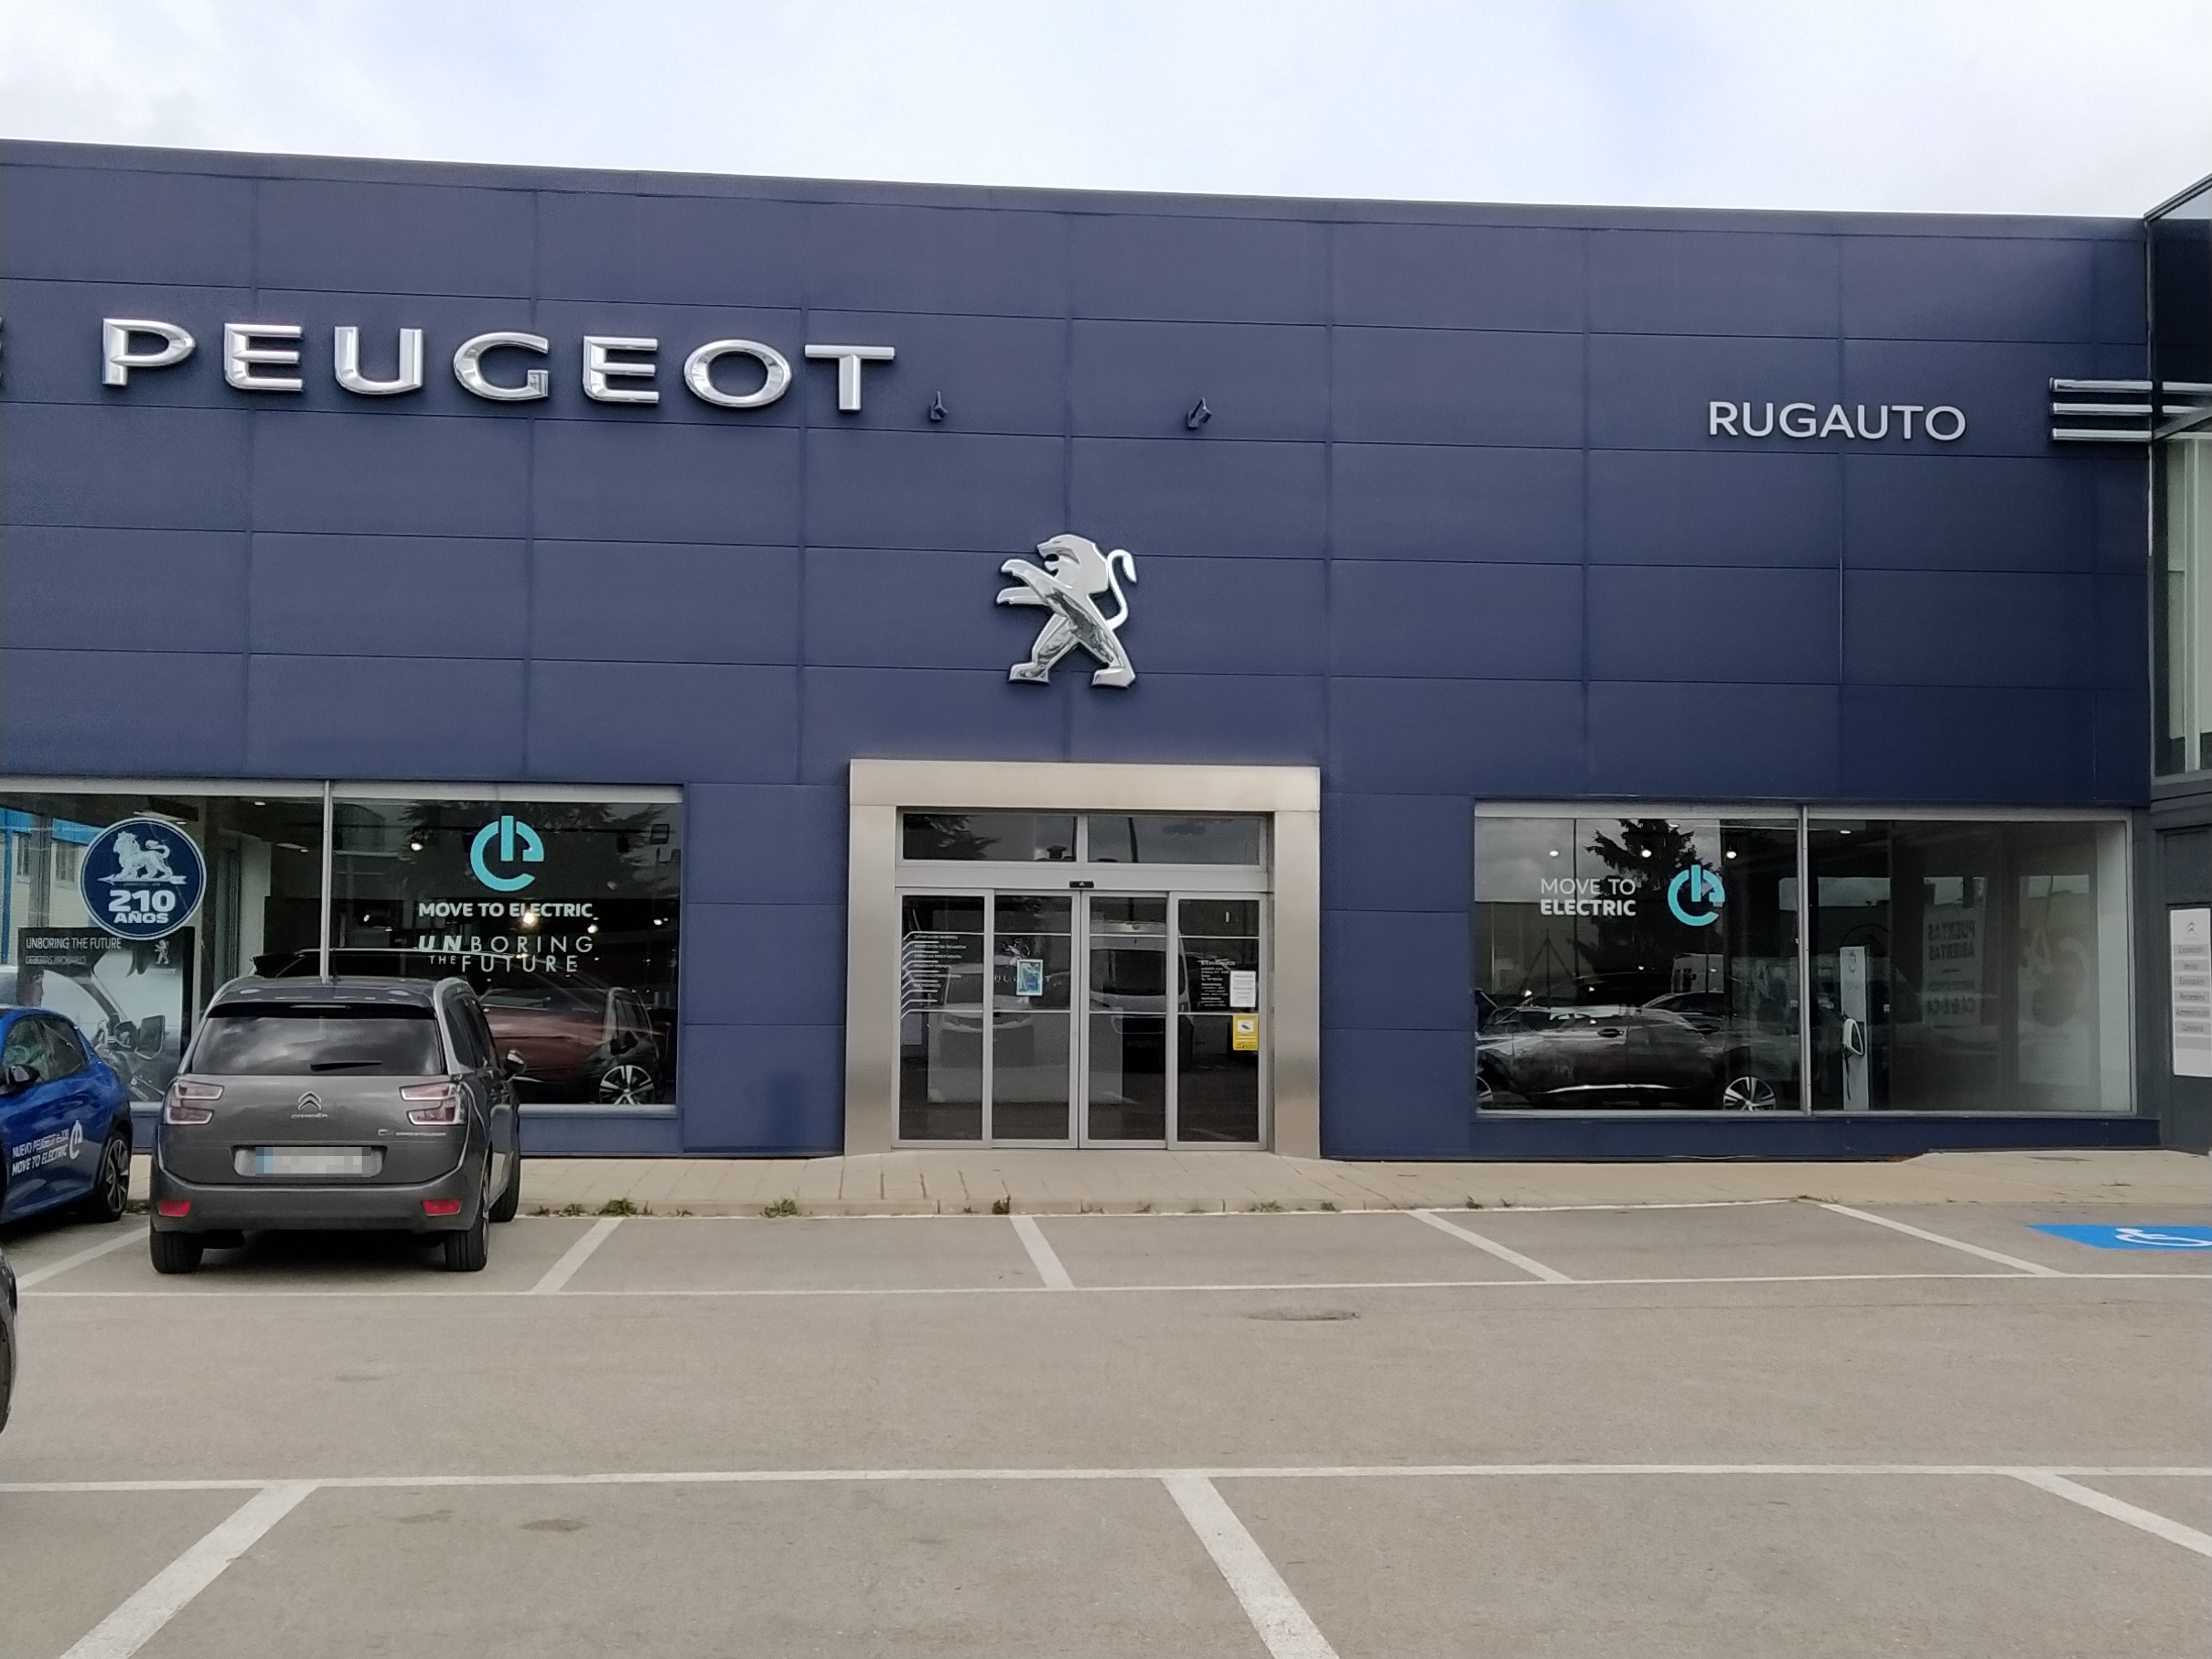 Peugeot Rugauto